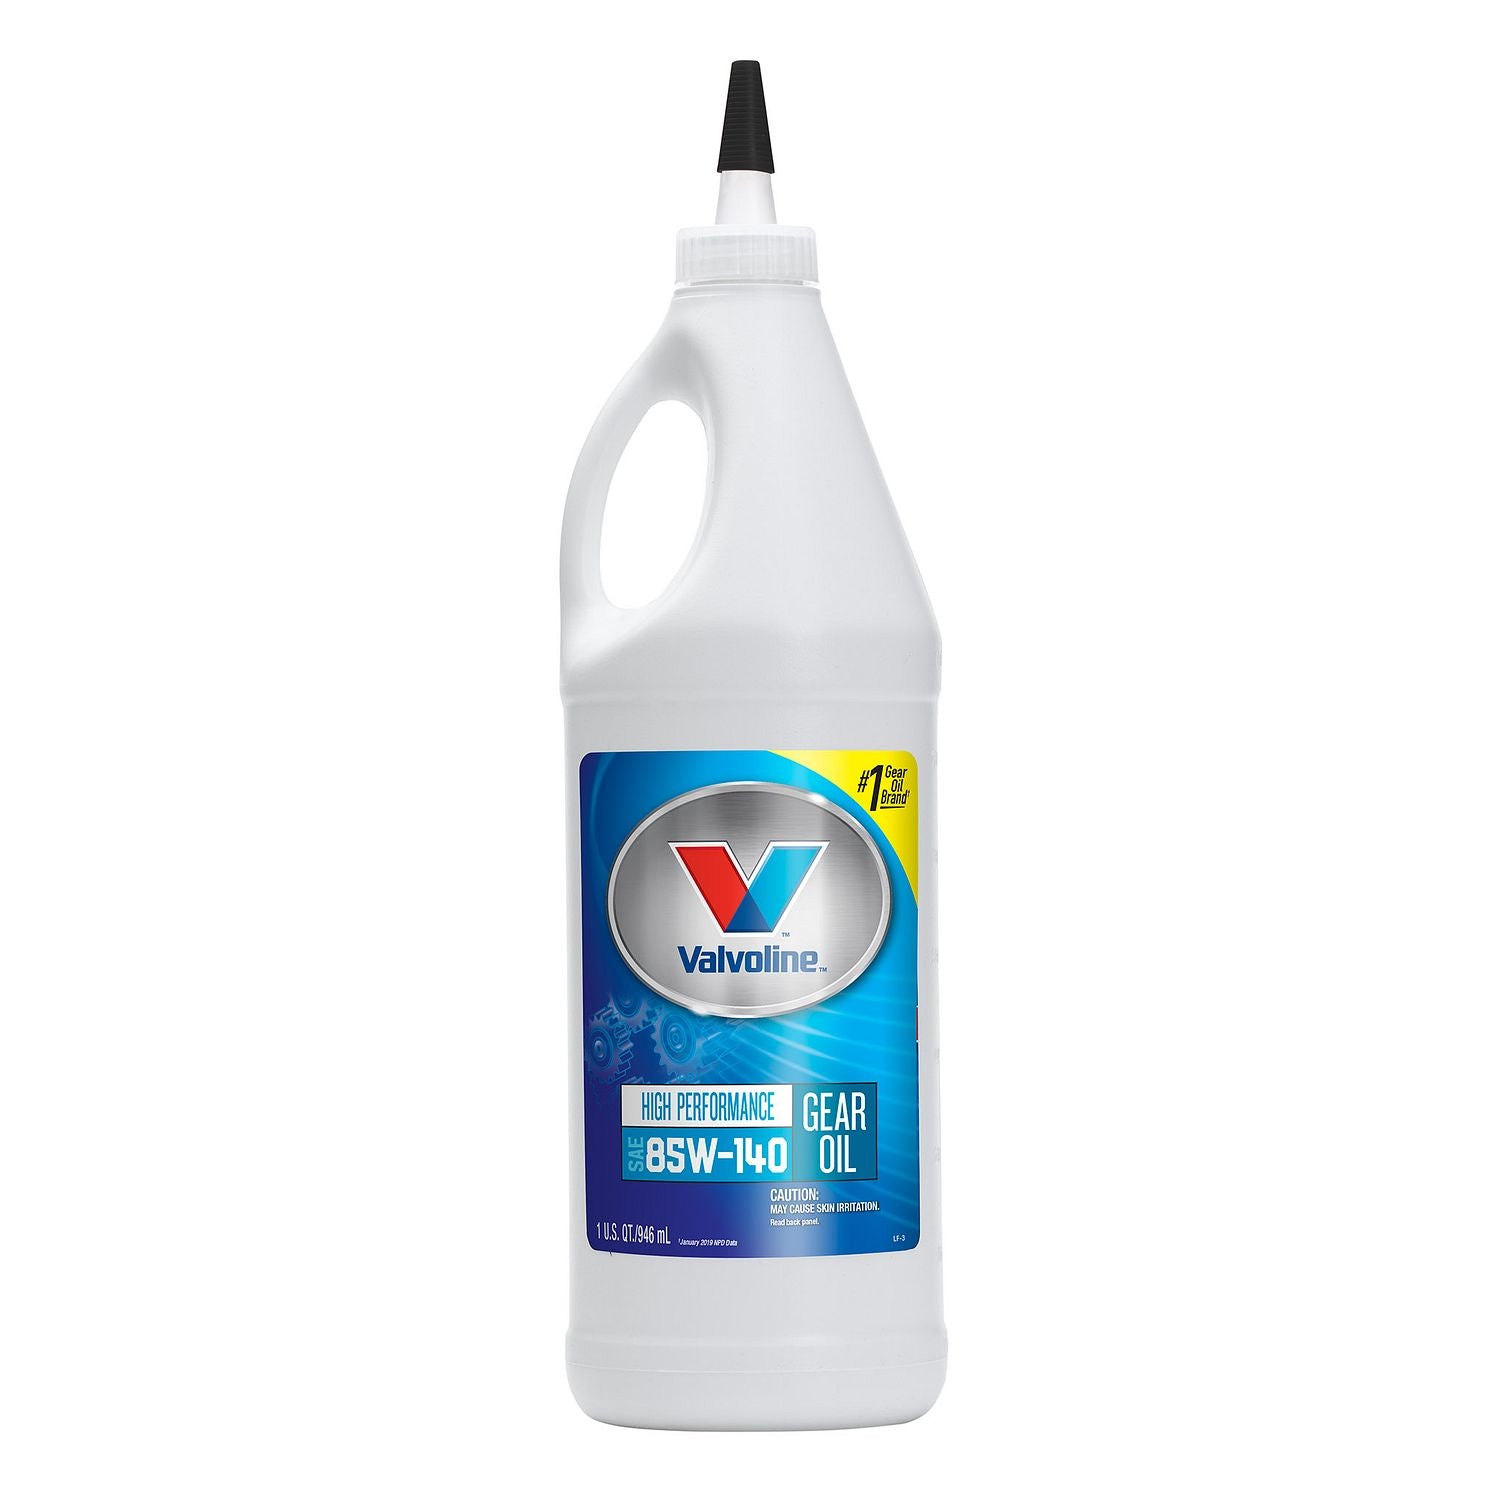 Valvoline 85W-140 High Performance Gear Oil 1 Quart